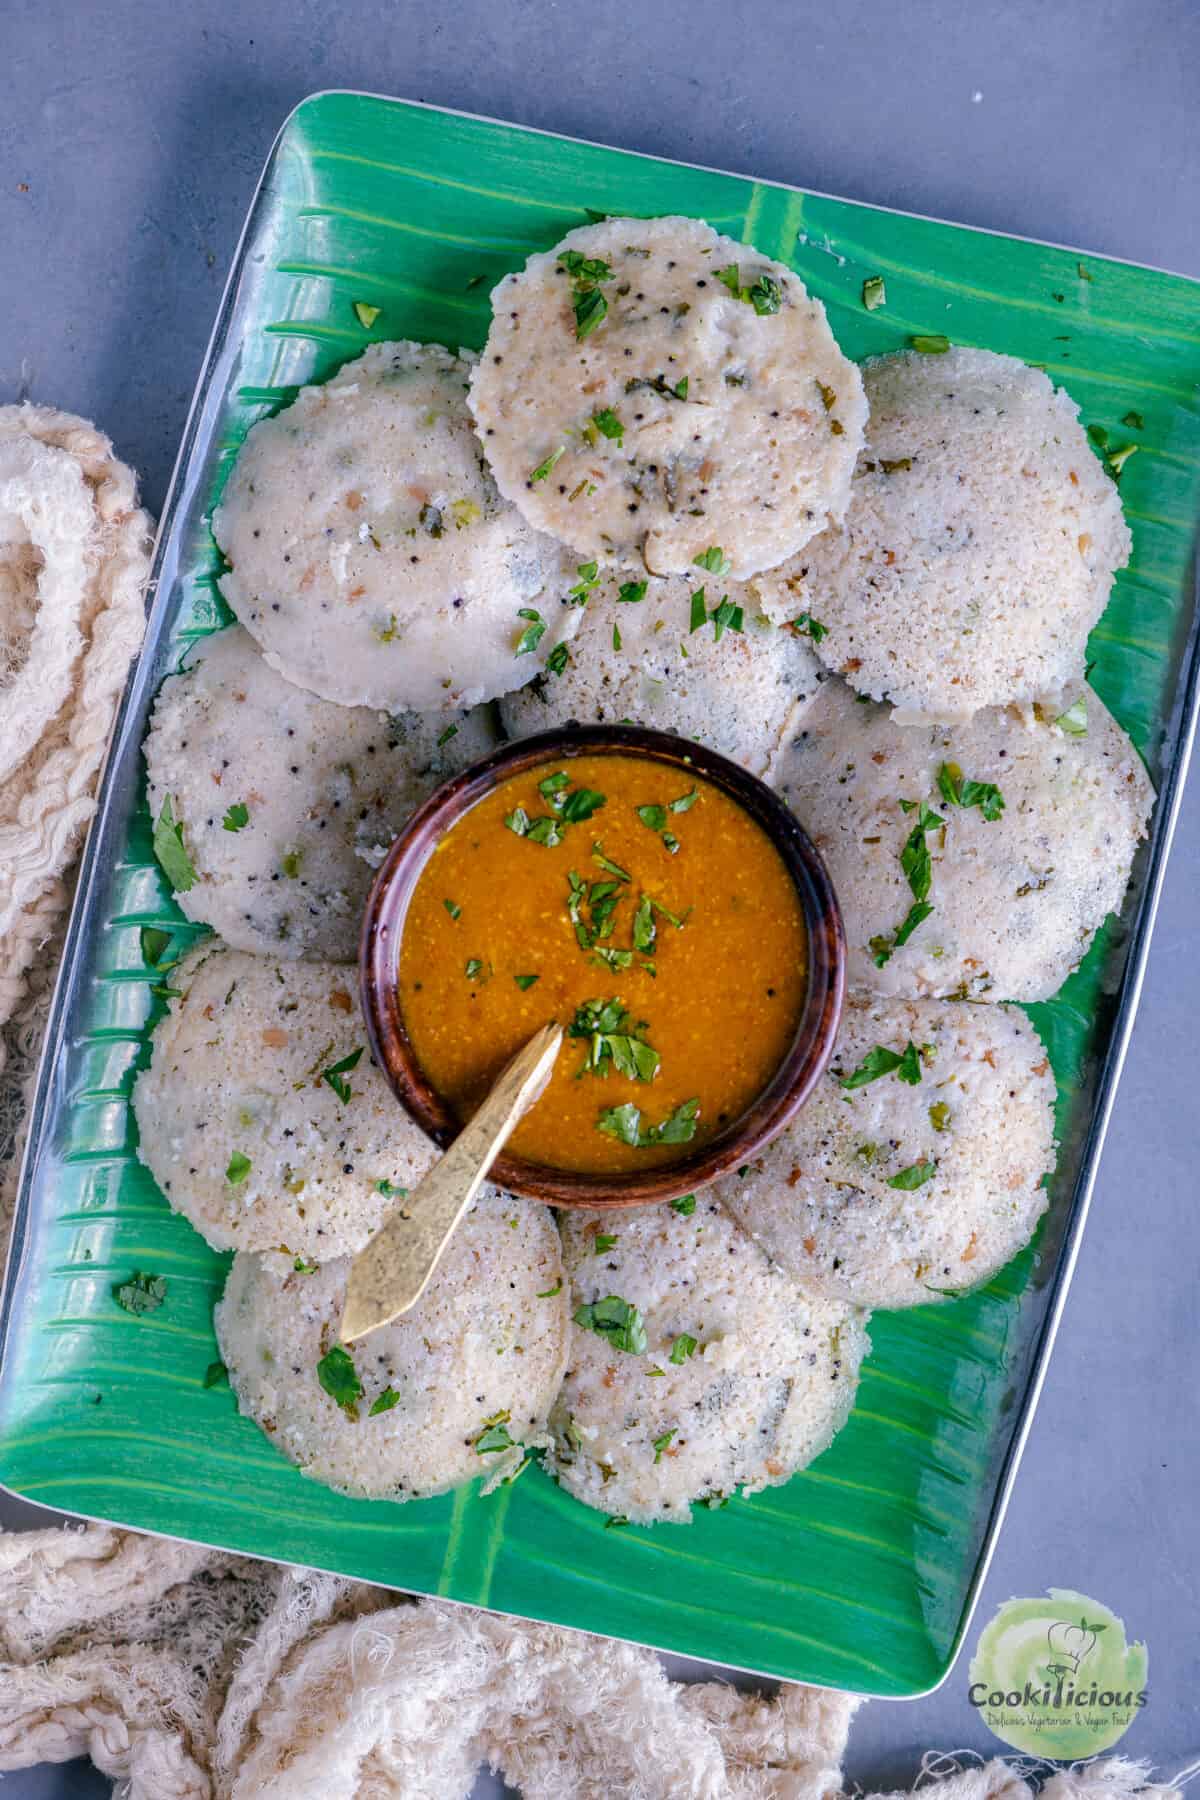 rava oats idli served on a platter with a bowl of sambhar in the center.